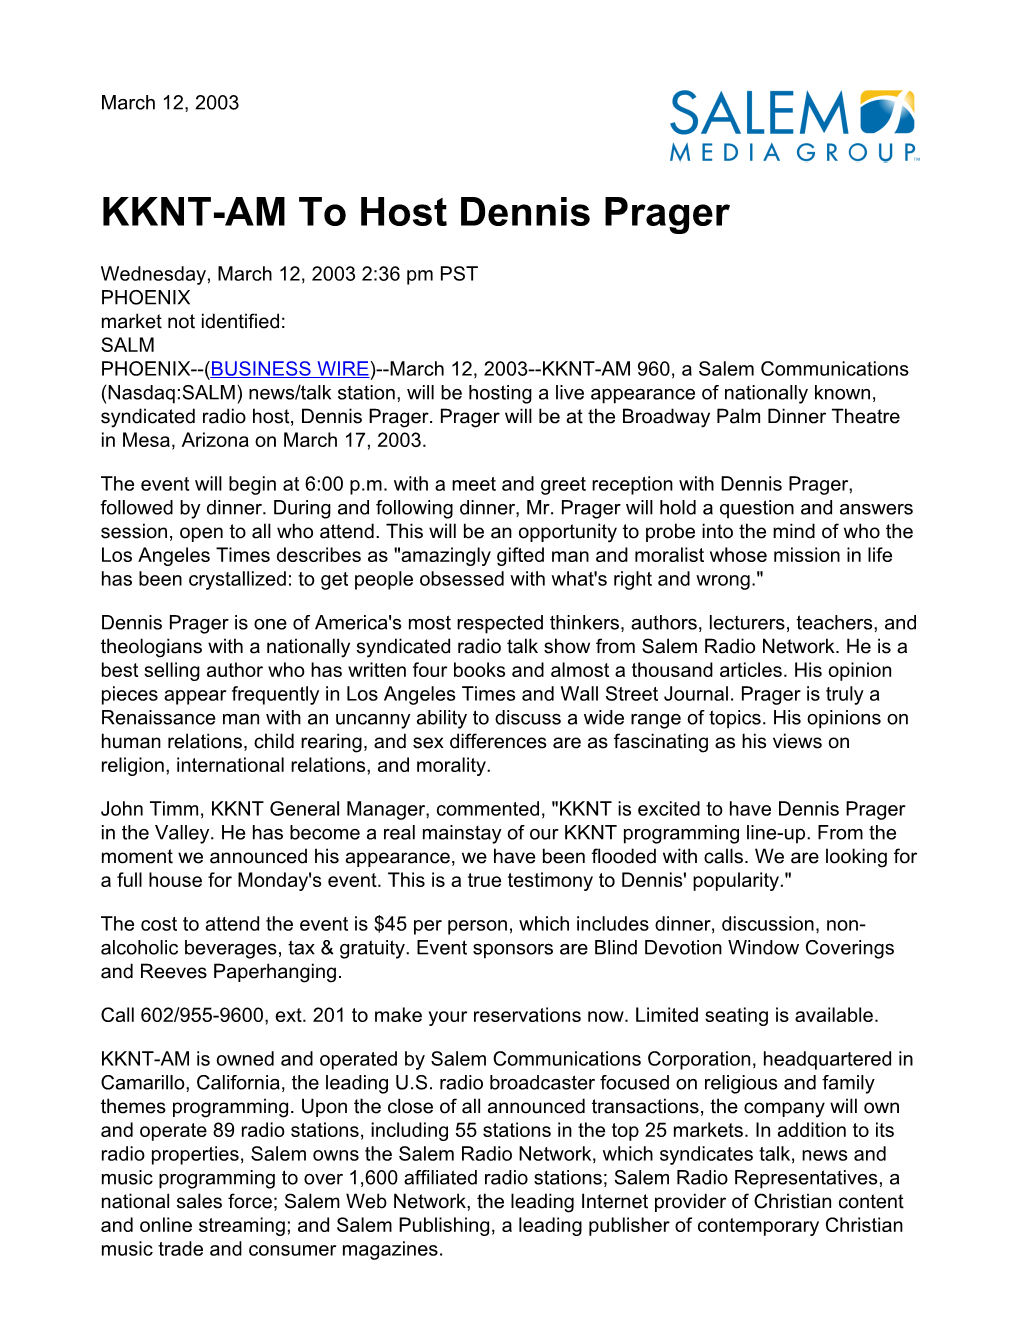 KKNT-AM to Host Dennis Prager